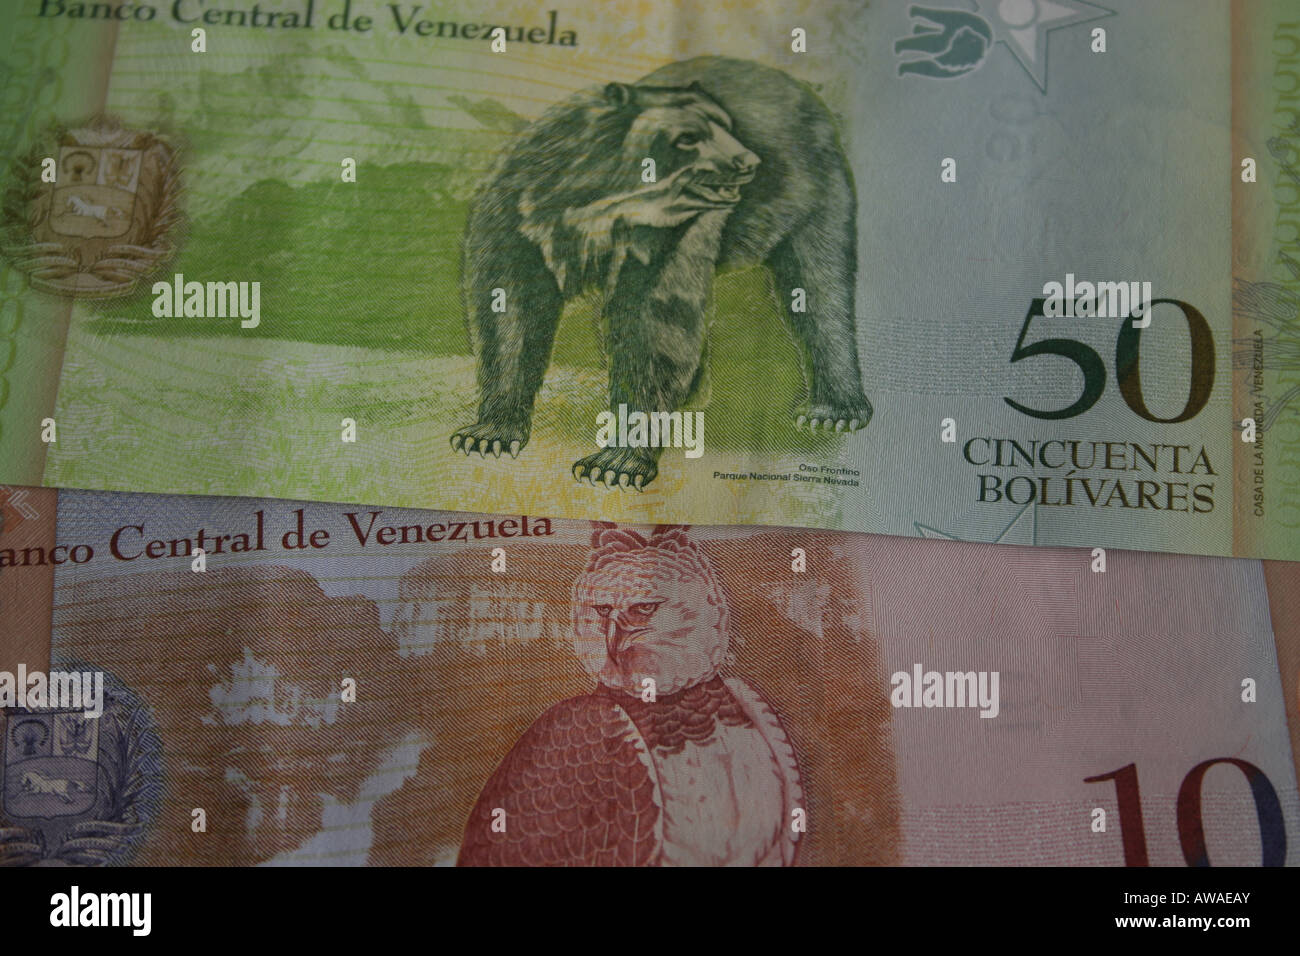 Venezuela Bolivares Fuertes, new 2008 currency. Bolivares Fuertes, nueva moneda Venezolana 2008 Stock Photo